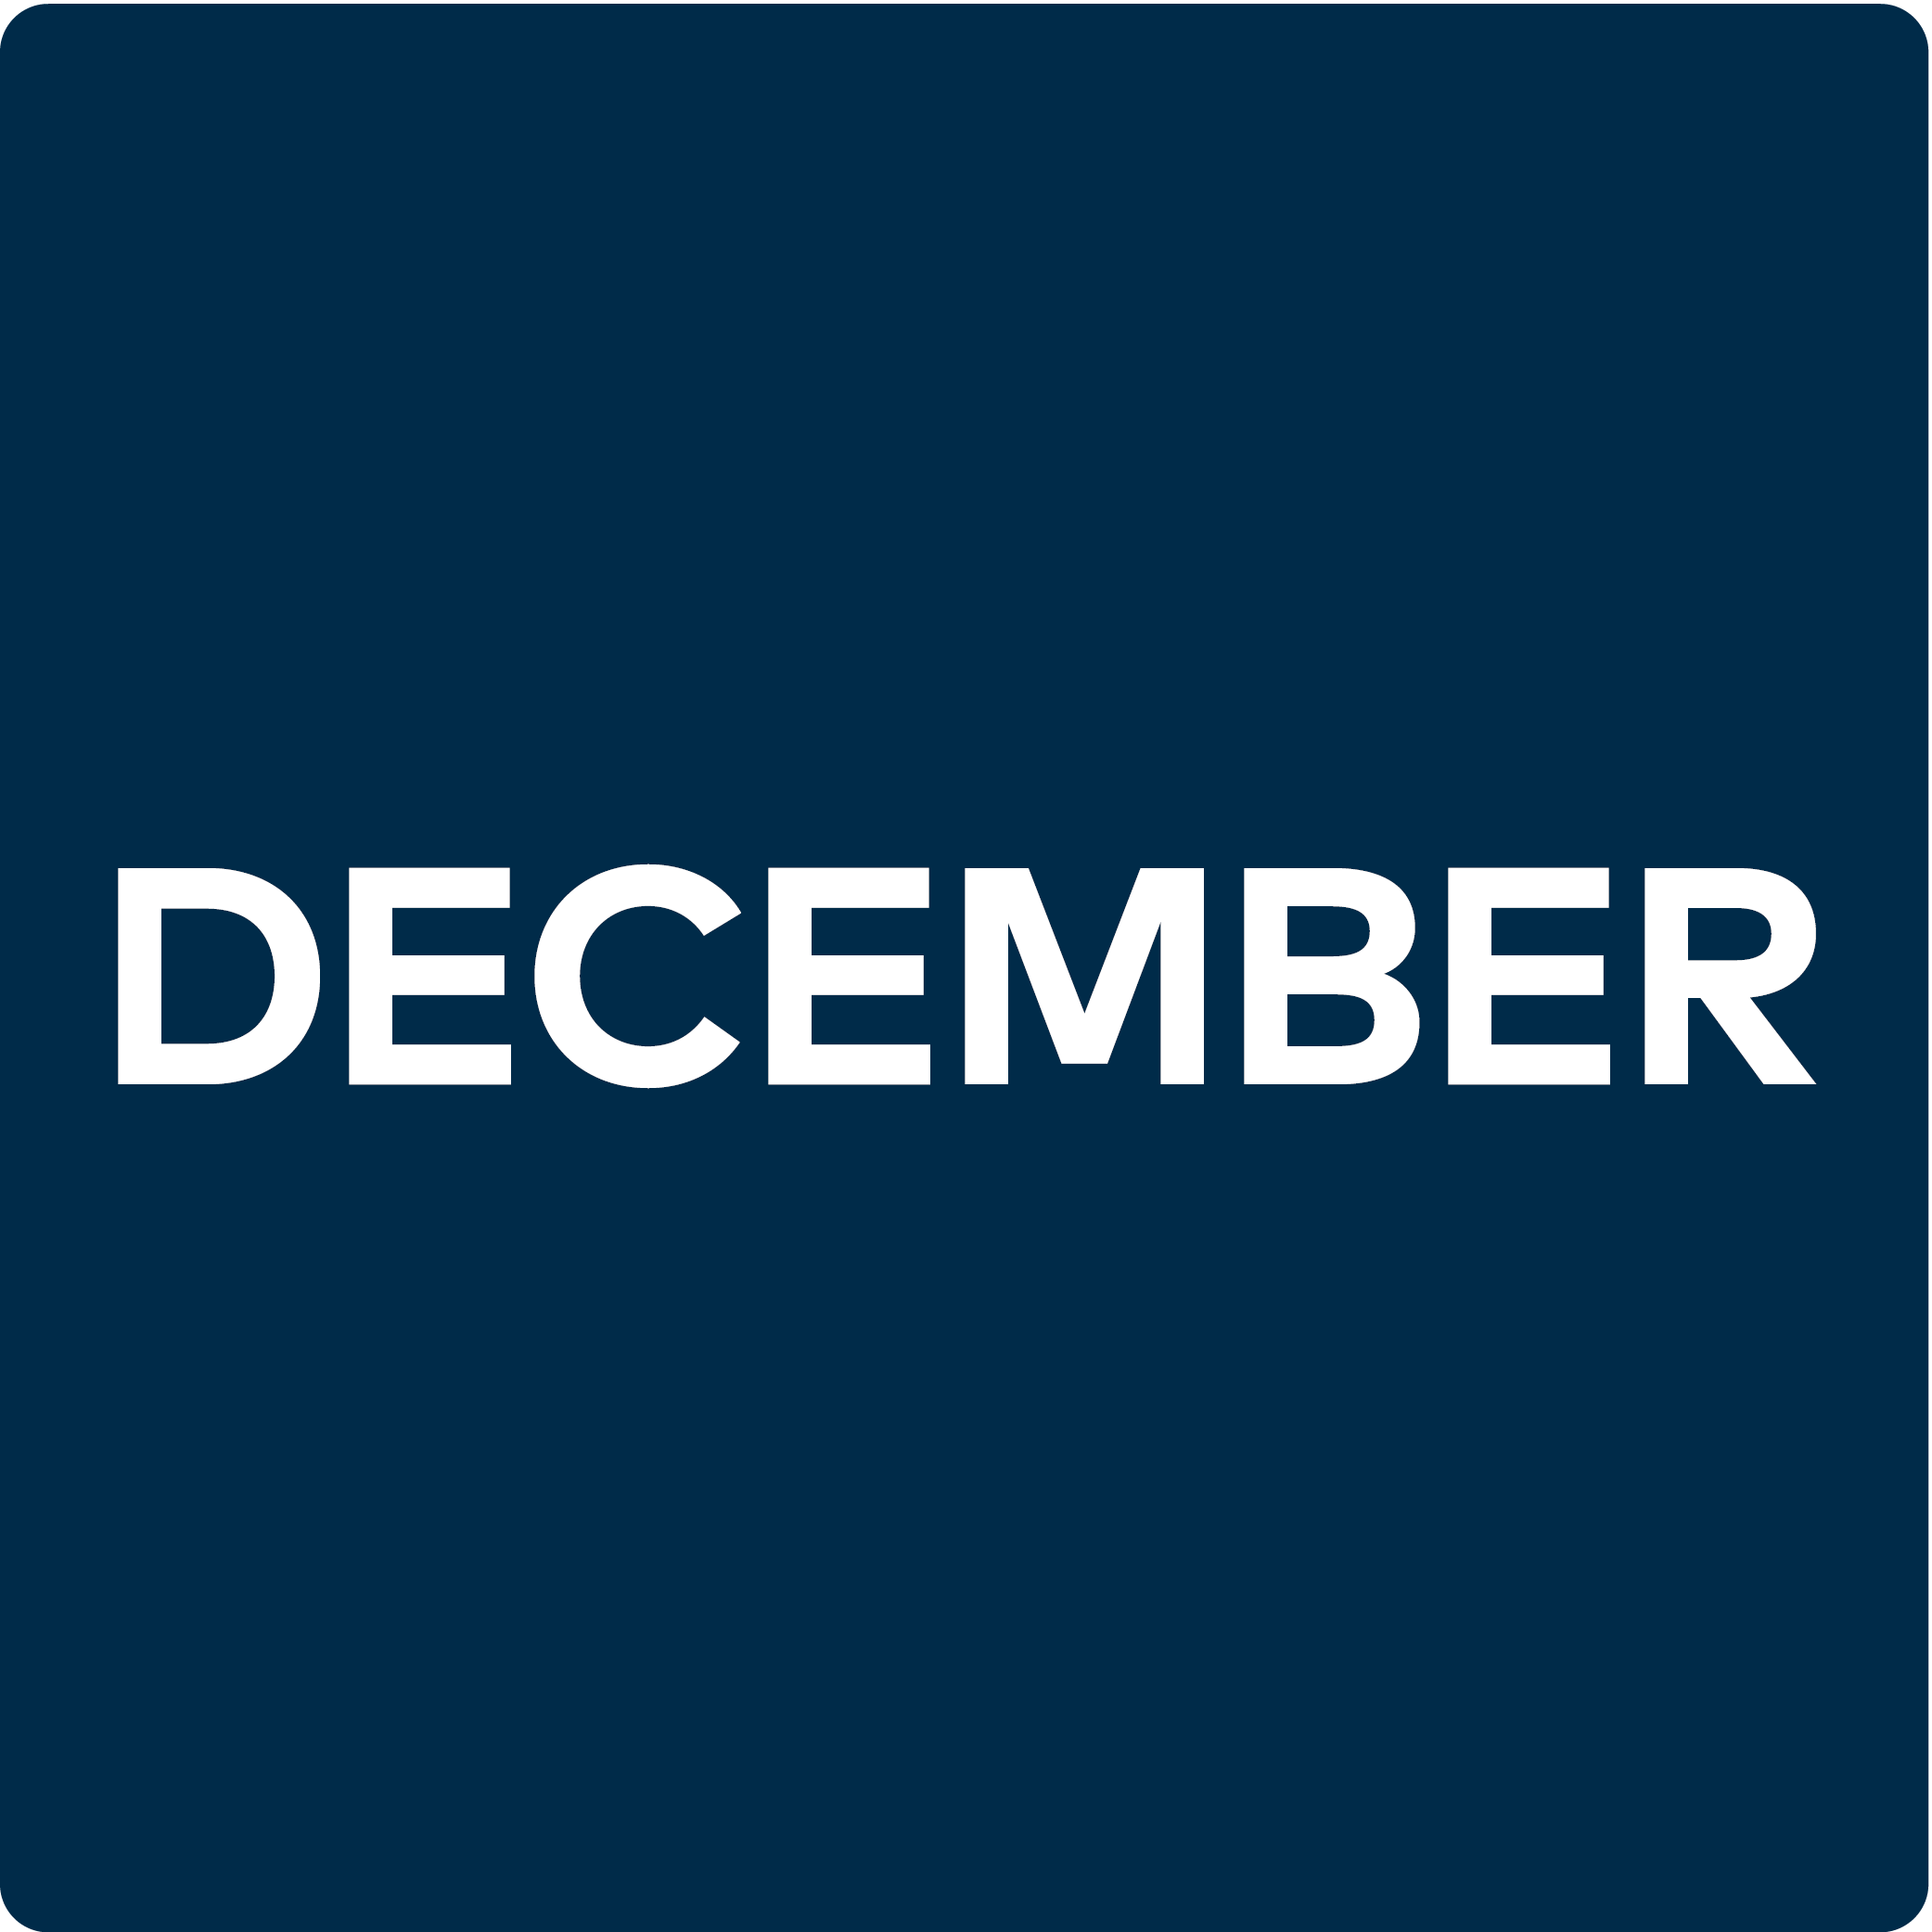 December graphic